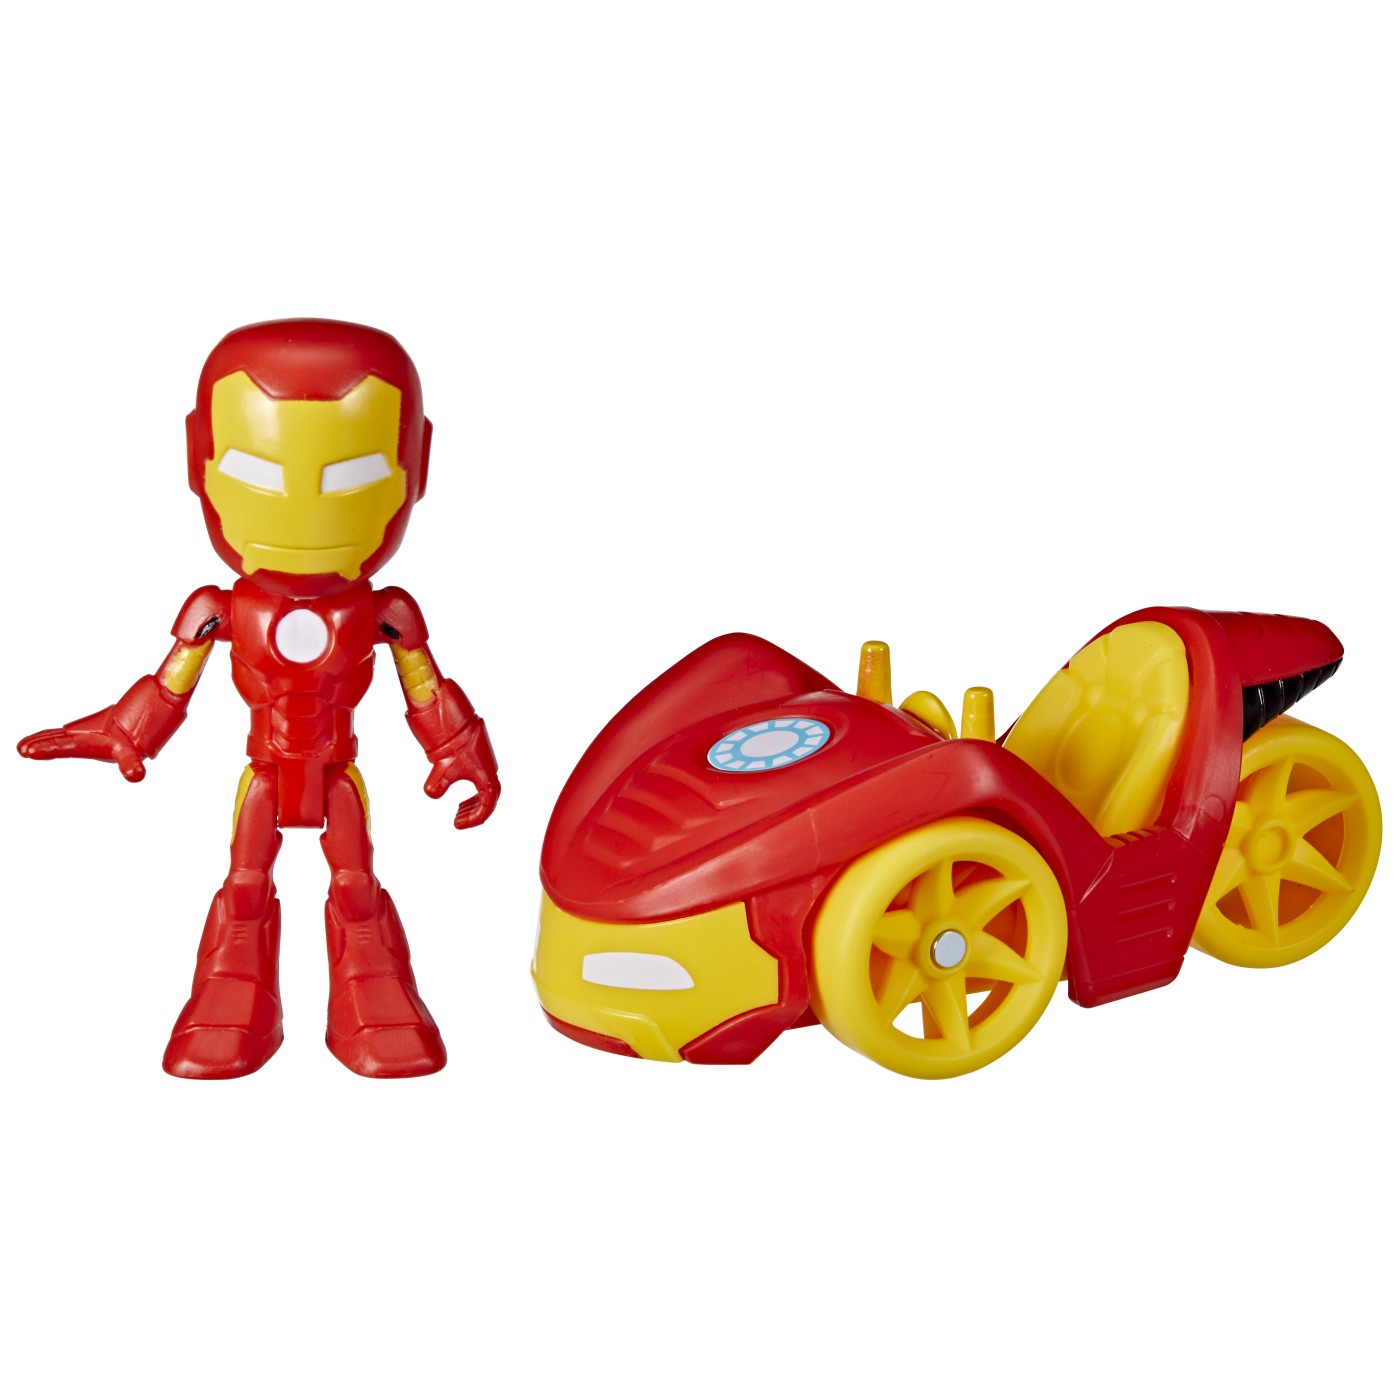 Set figurina si masinunta - Spidey And His Amazing Friends - Iron Man & Iron Racer | Hasbro